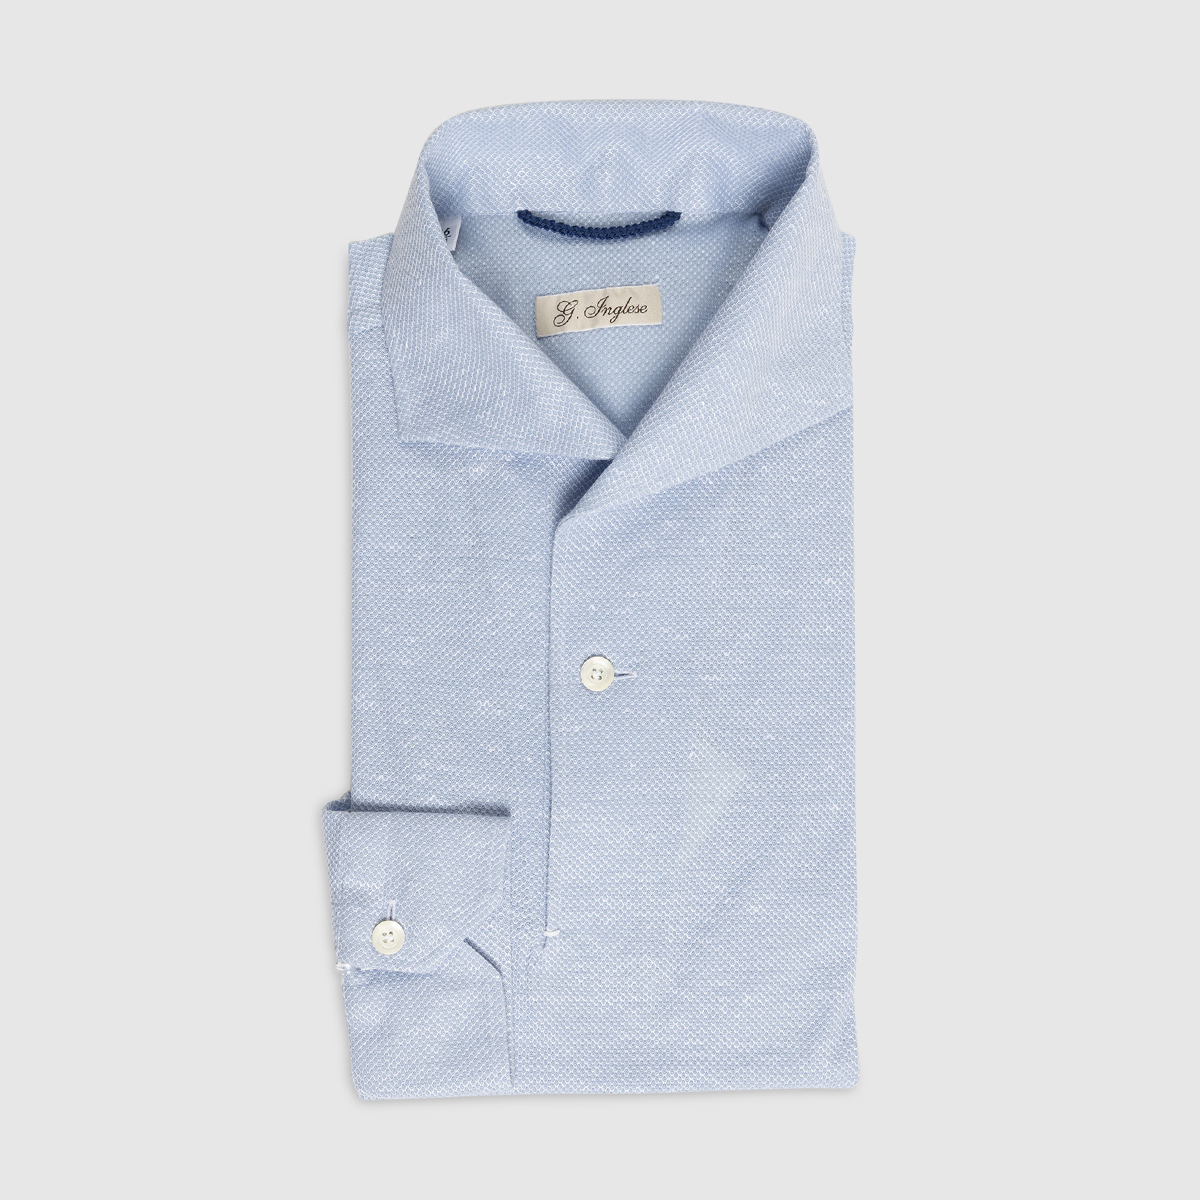 Miami Polo Shirt in Light Blue Cotton-Linen Piquet G. Inglese on sale 2022